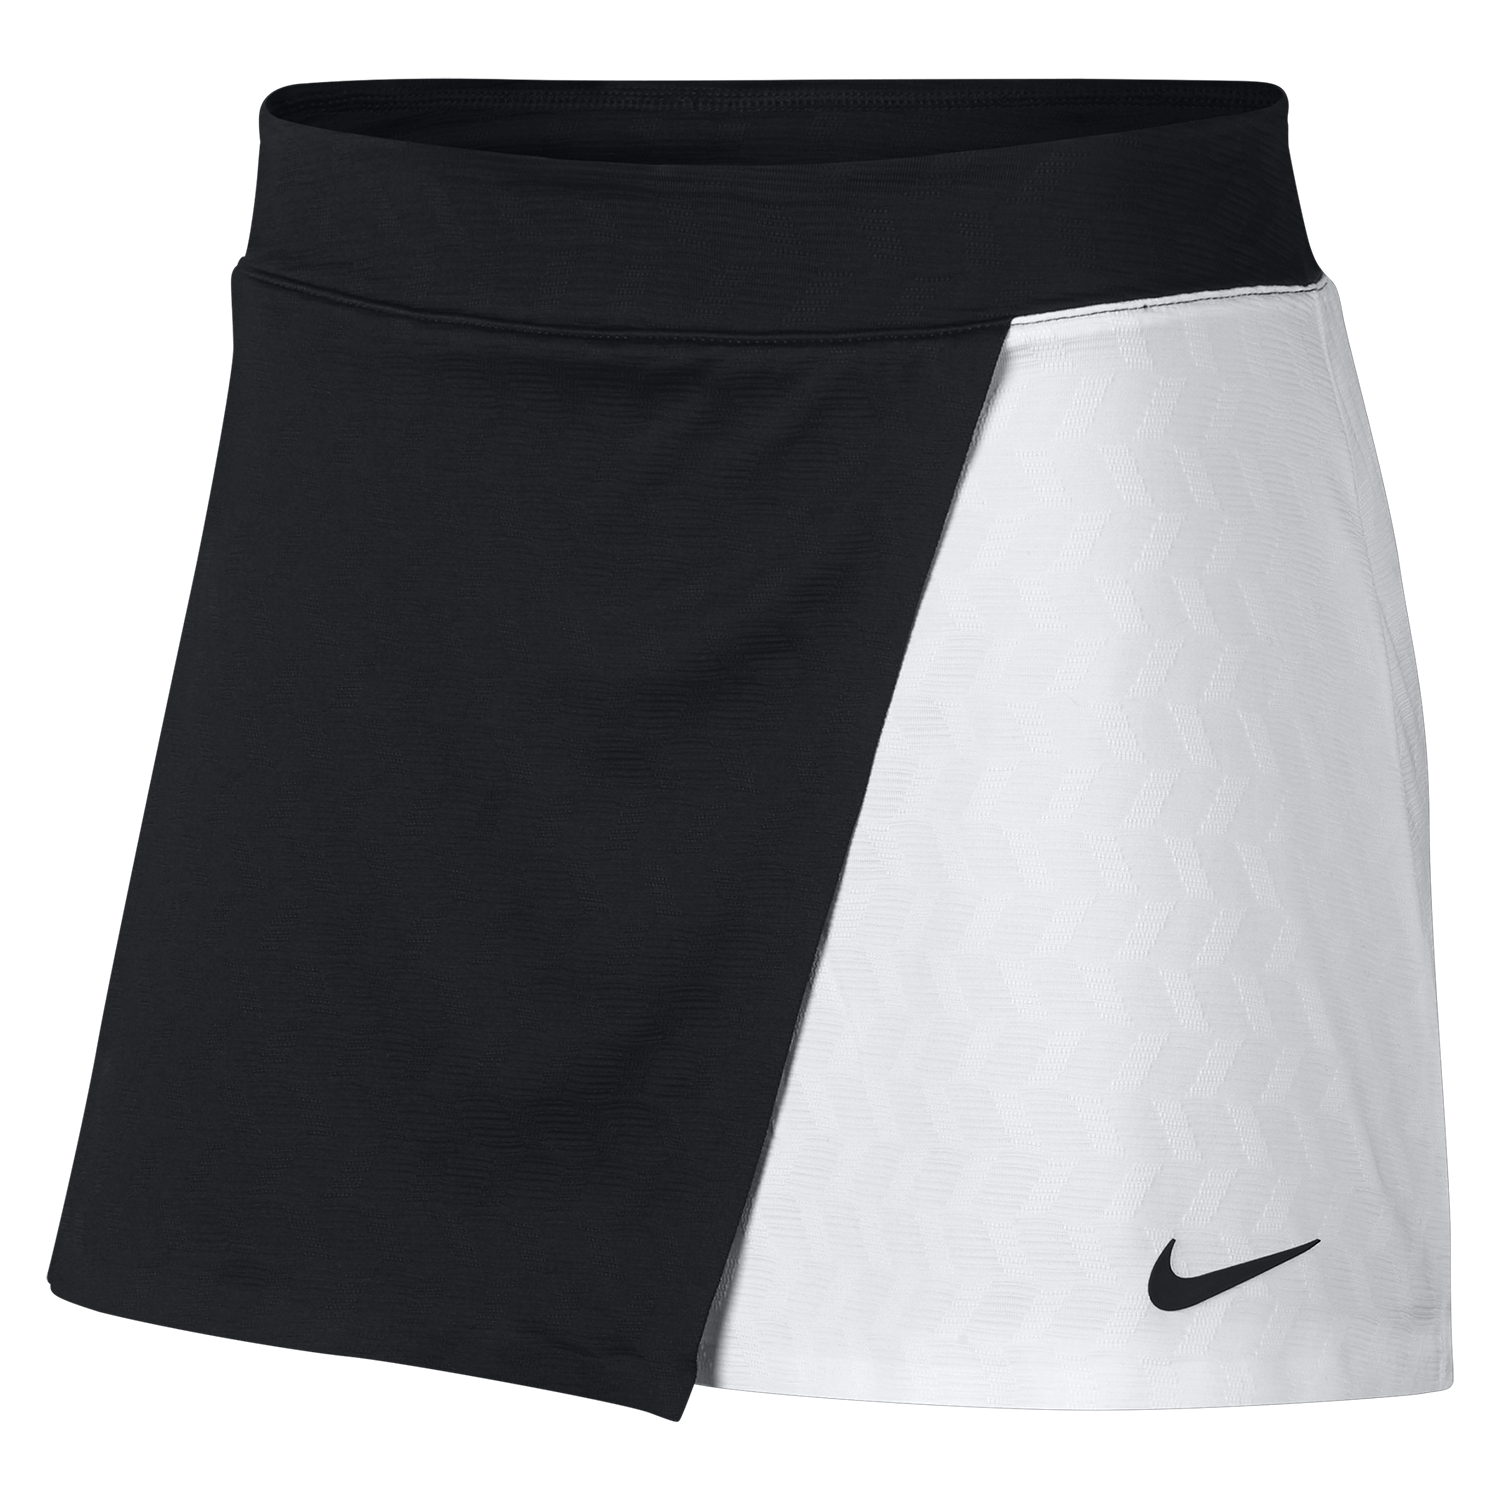 Юбка найк. Юбка Nike Court Dry. Юбка для тенниса Nike Dry Fit. Юбка Nike Golf Sport Dri Fit. Юбка-шорты women's NIKECOURT Tennis skirt.